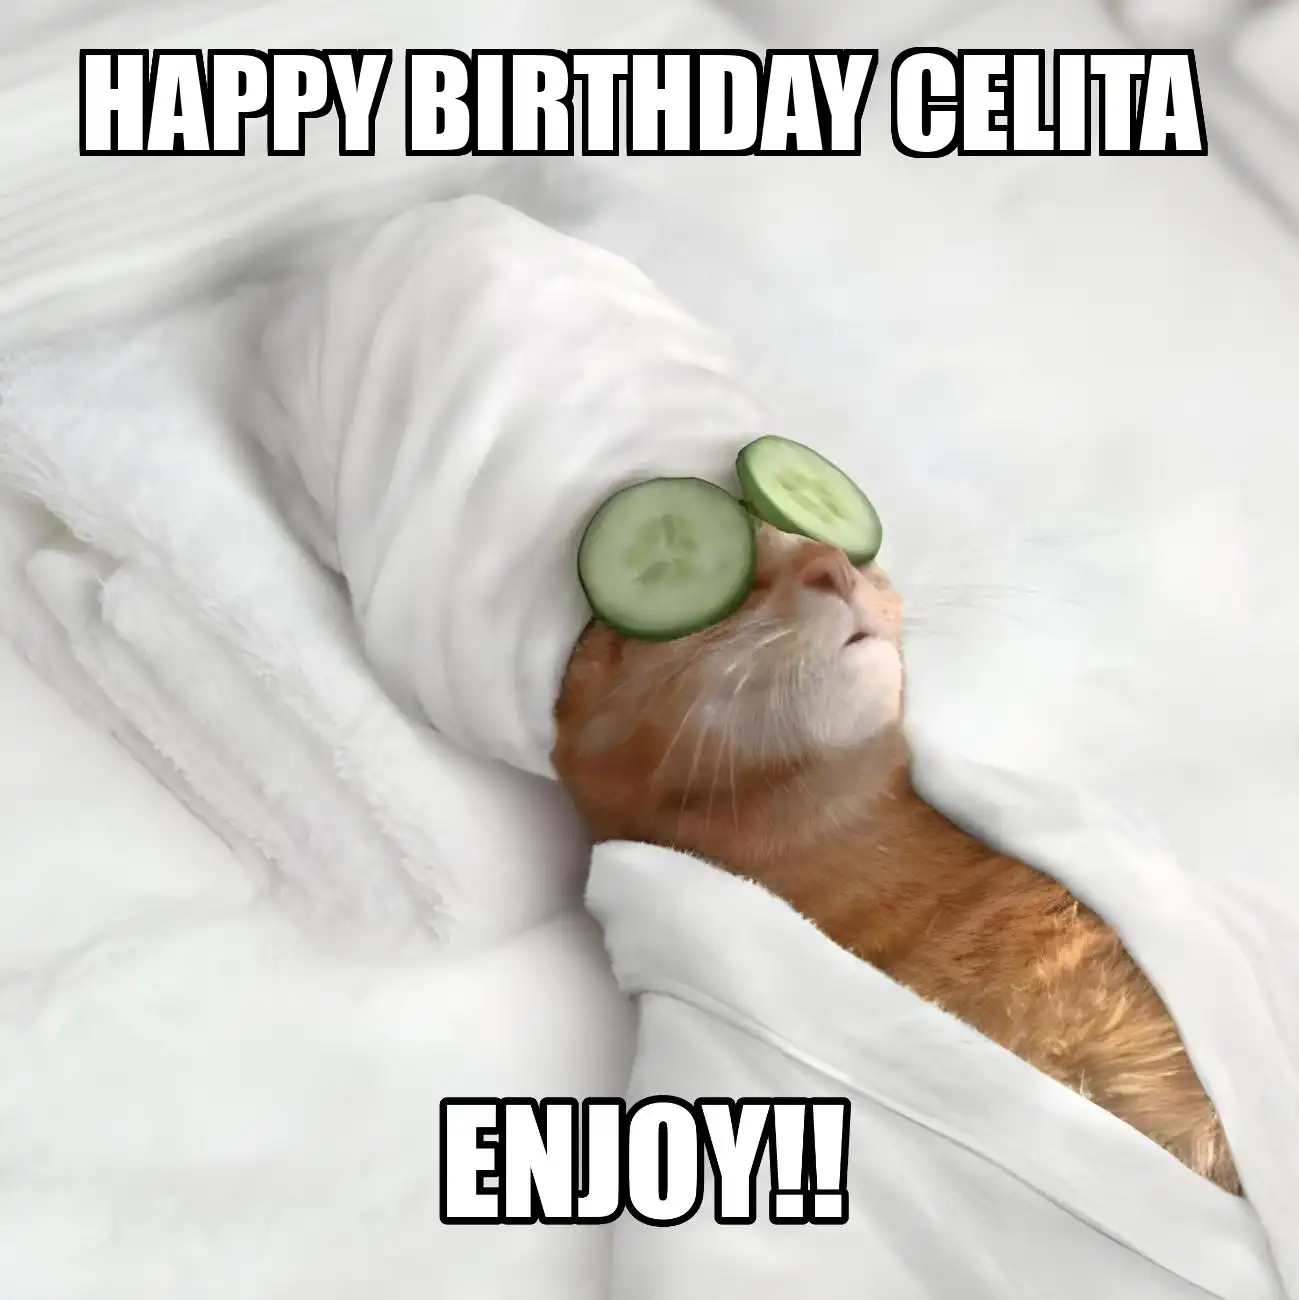 Happy Birthday Celita Enjoy Cat Meme